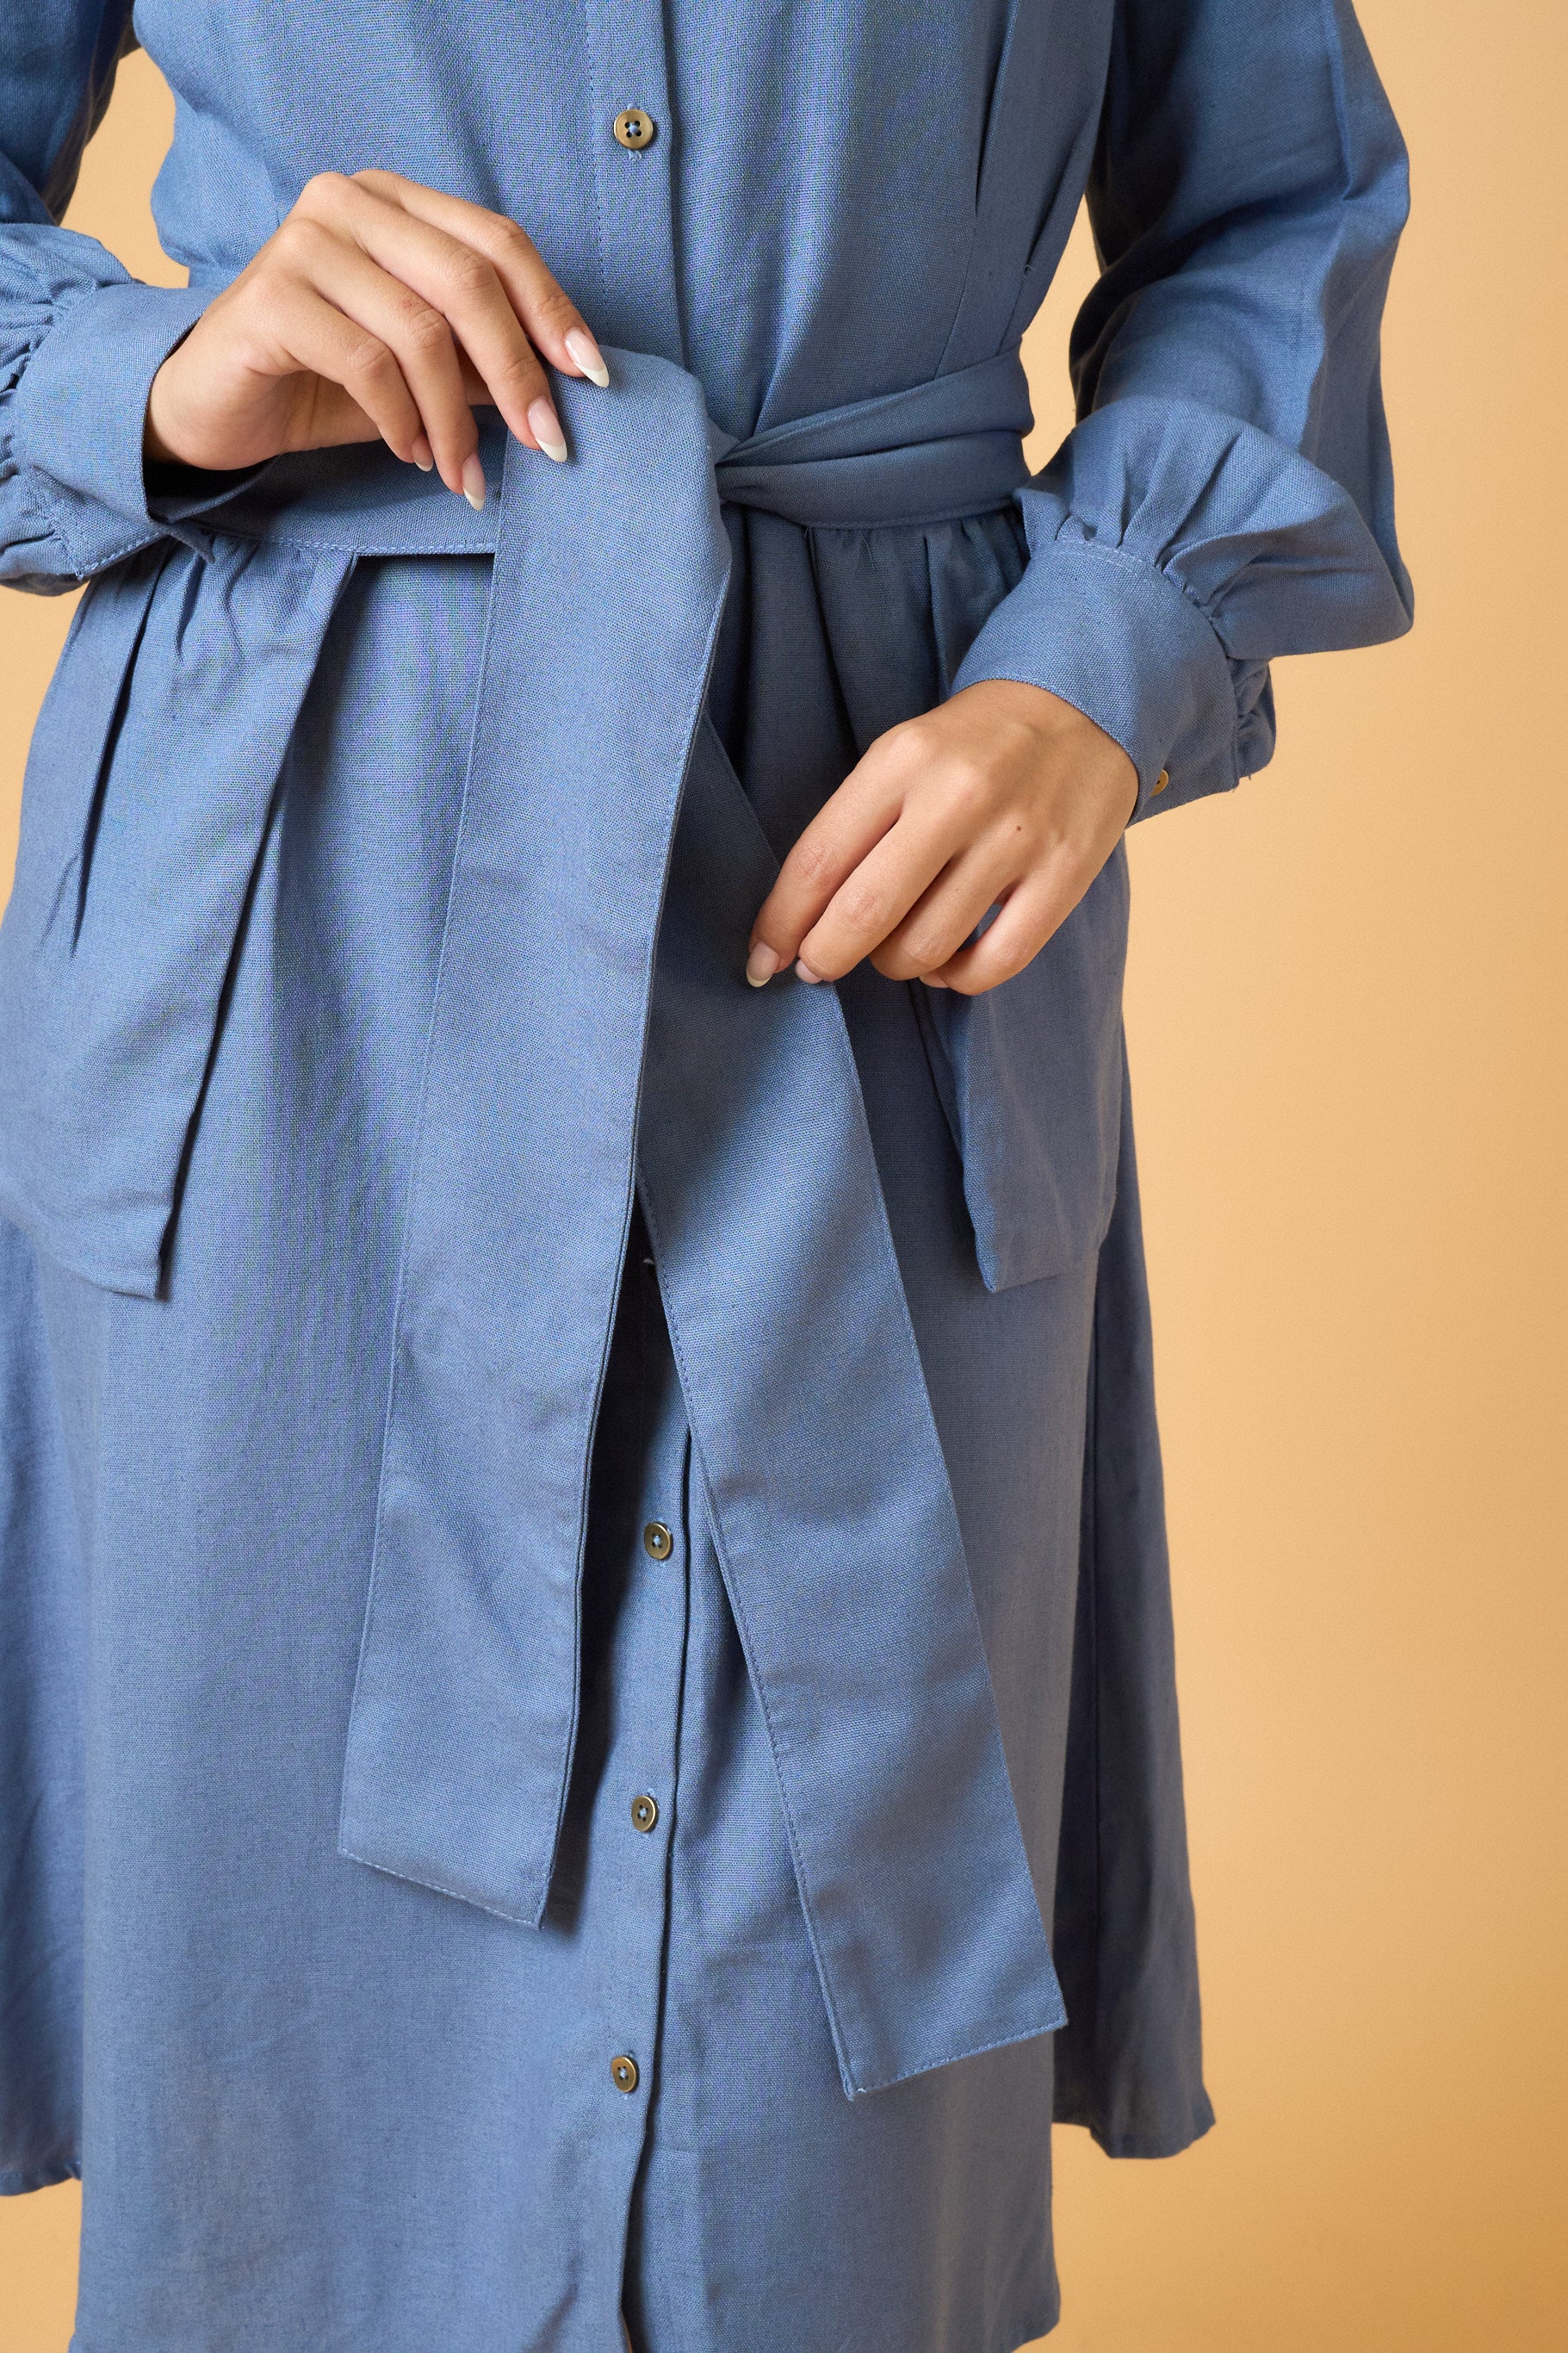 Amara Pocket Dress - Cobalt Blue